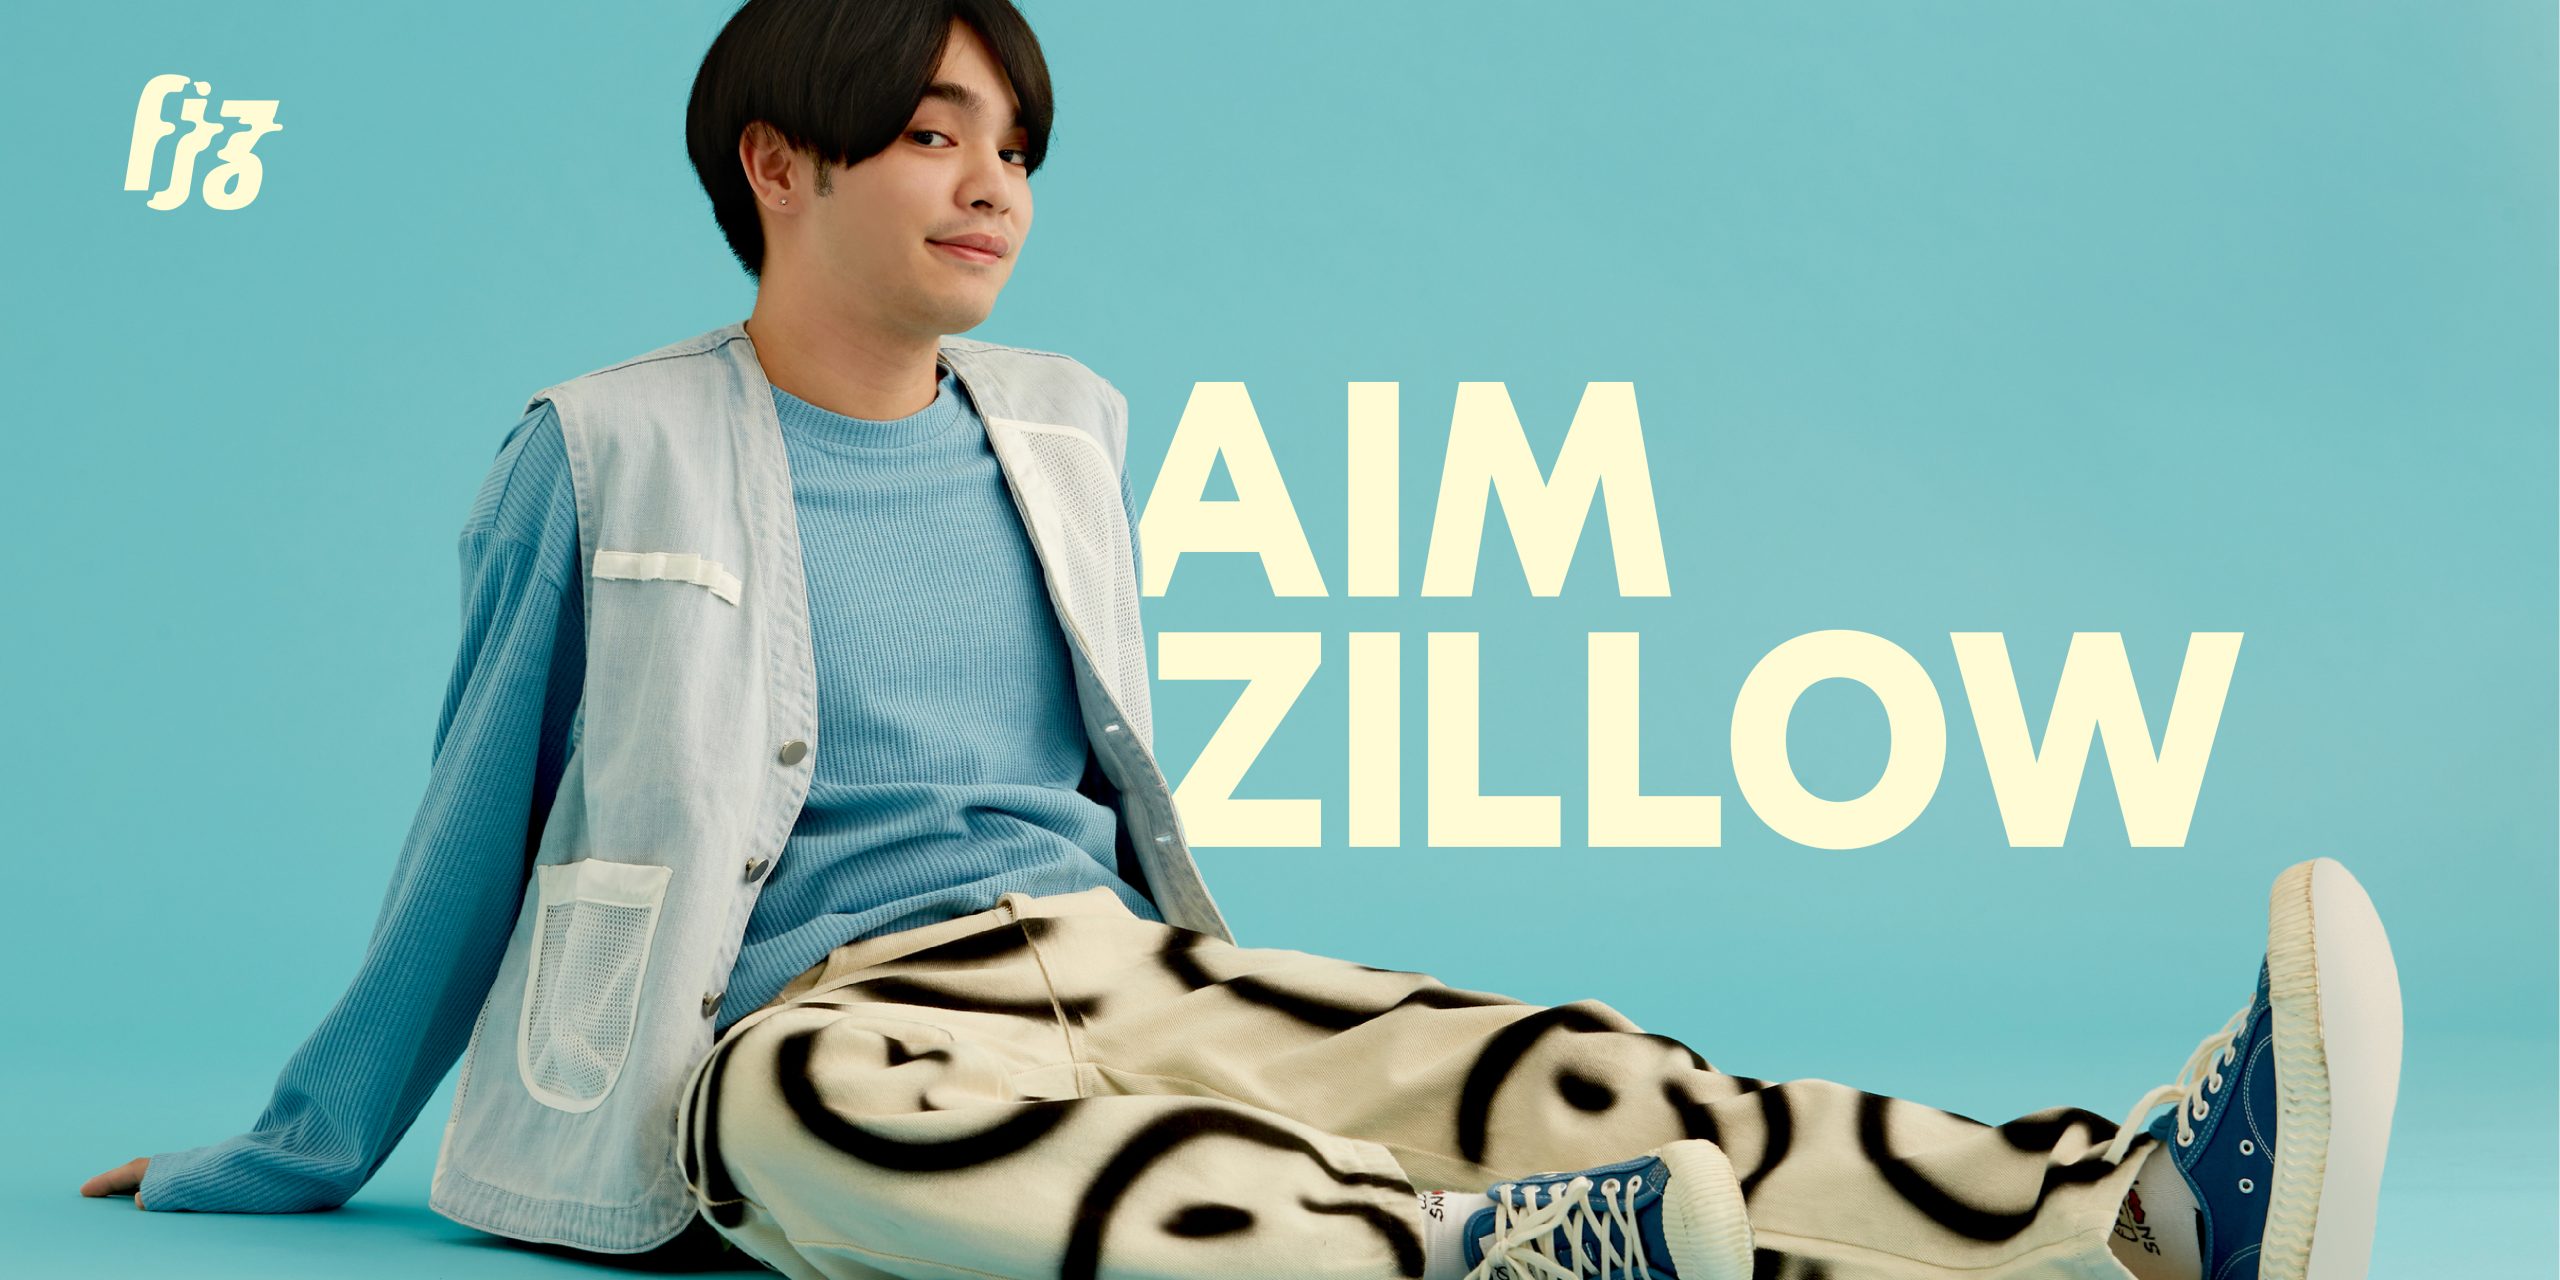 ‘Aimzillow’ ศิลปินมากความสามารถจาก MILK! ที่อยากให้รู้จัก